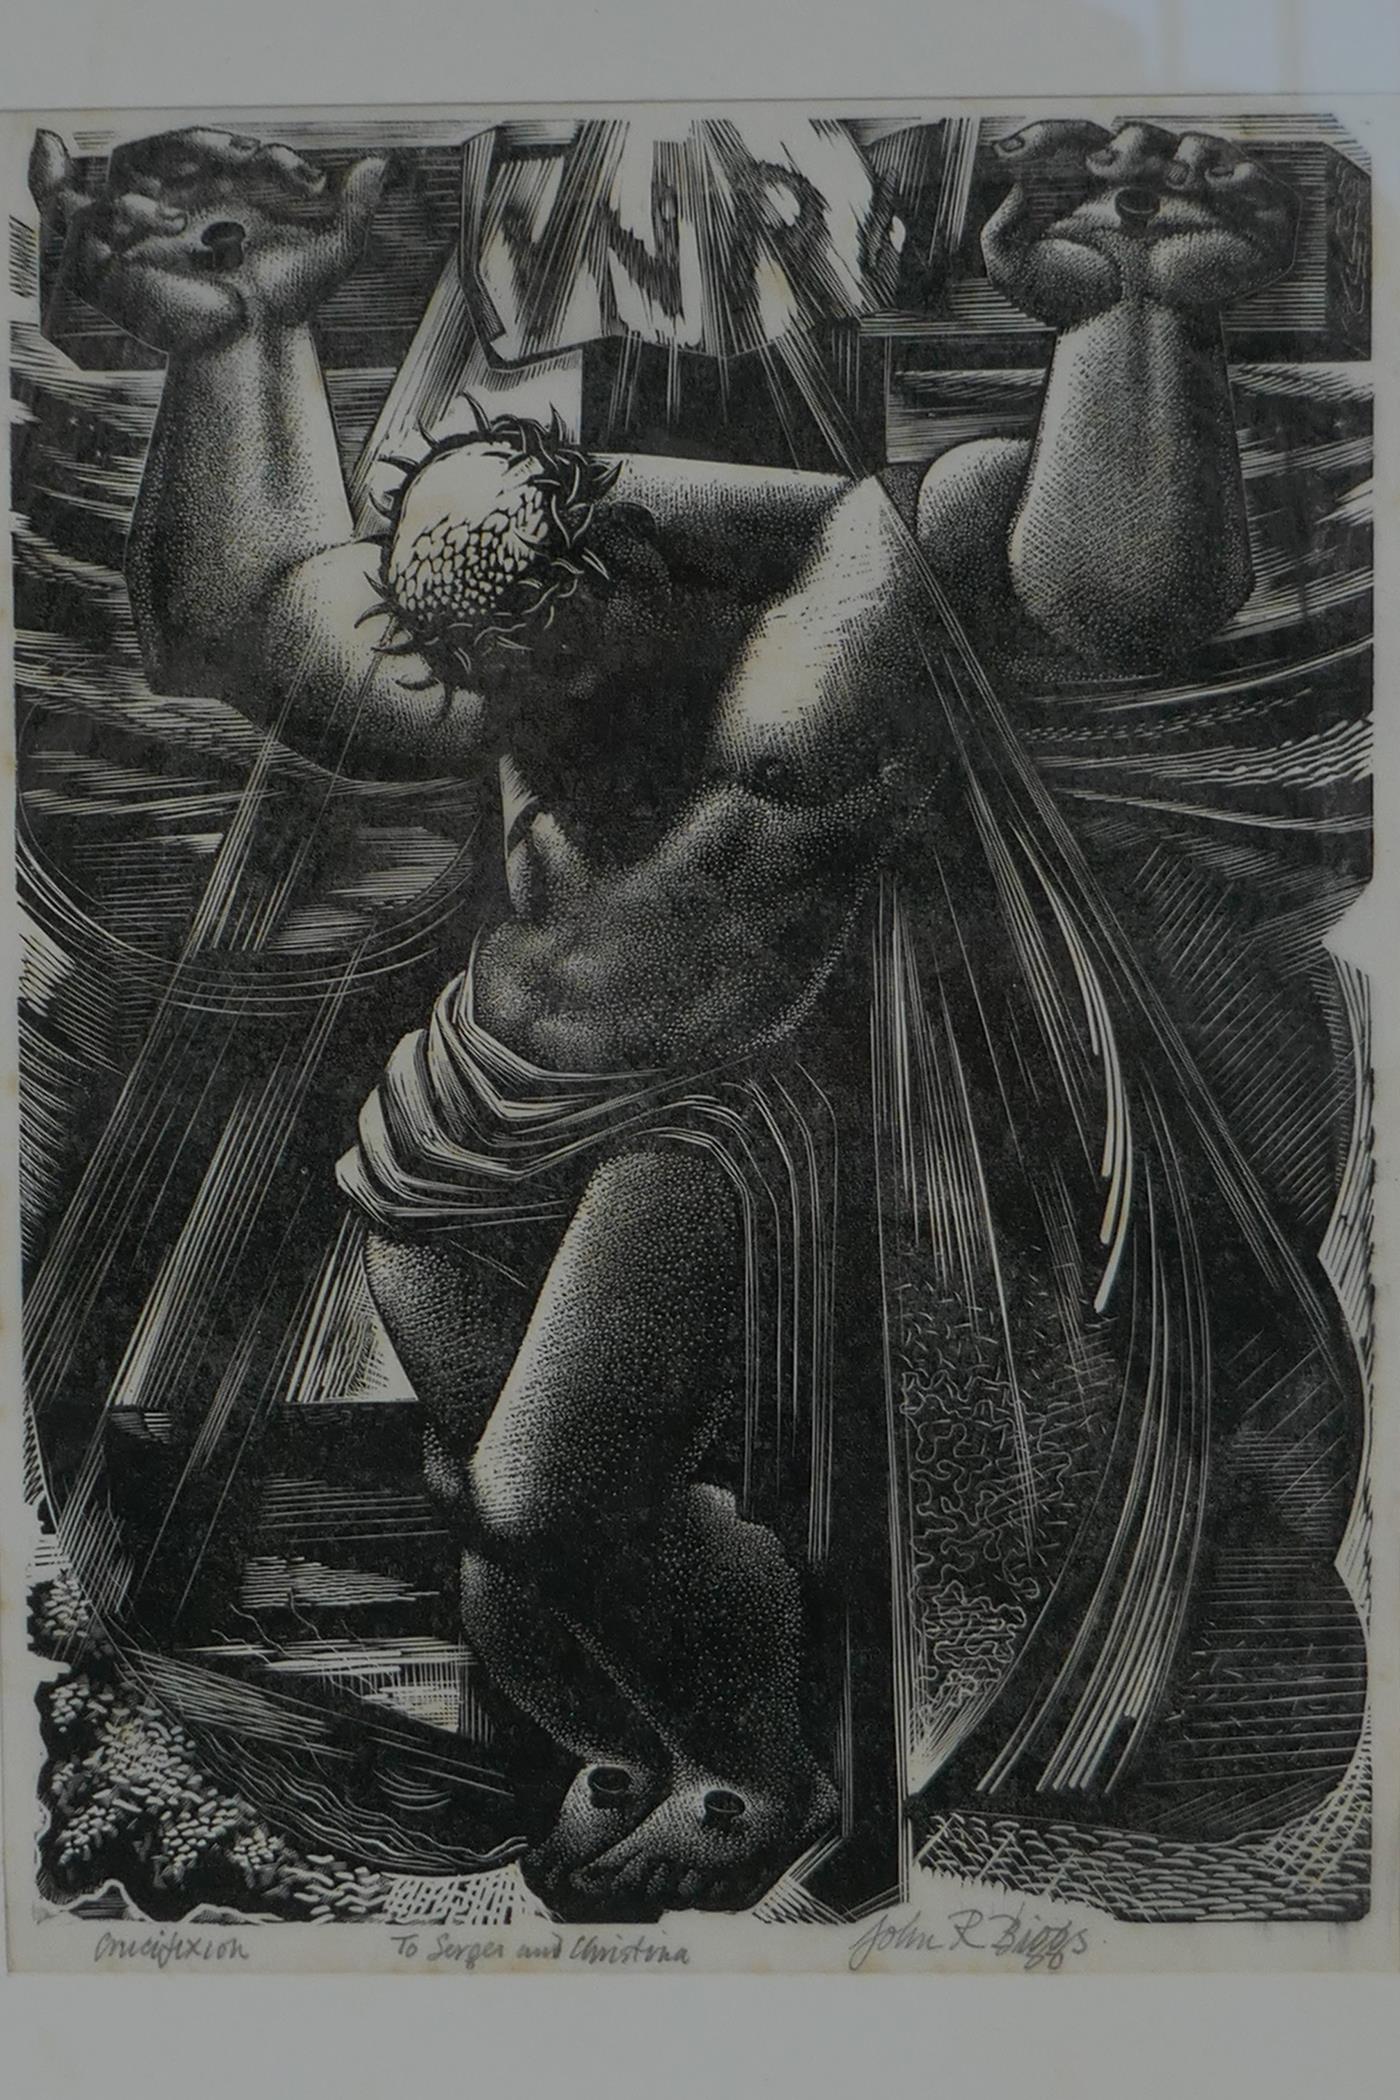 John R. Biggs, Crucifixion, signed woodcut print, 24 x 17cm